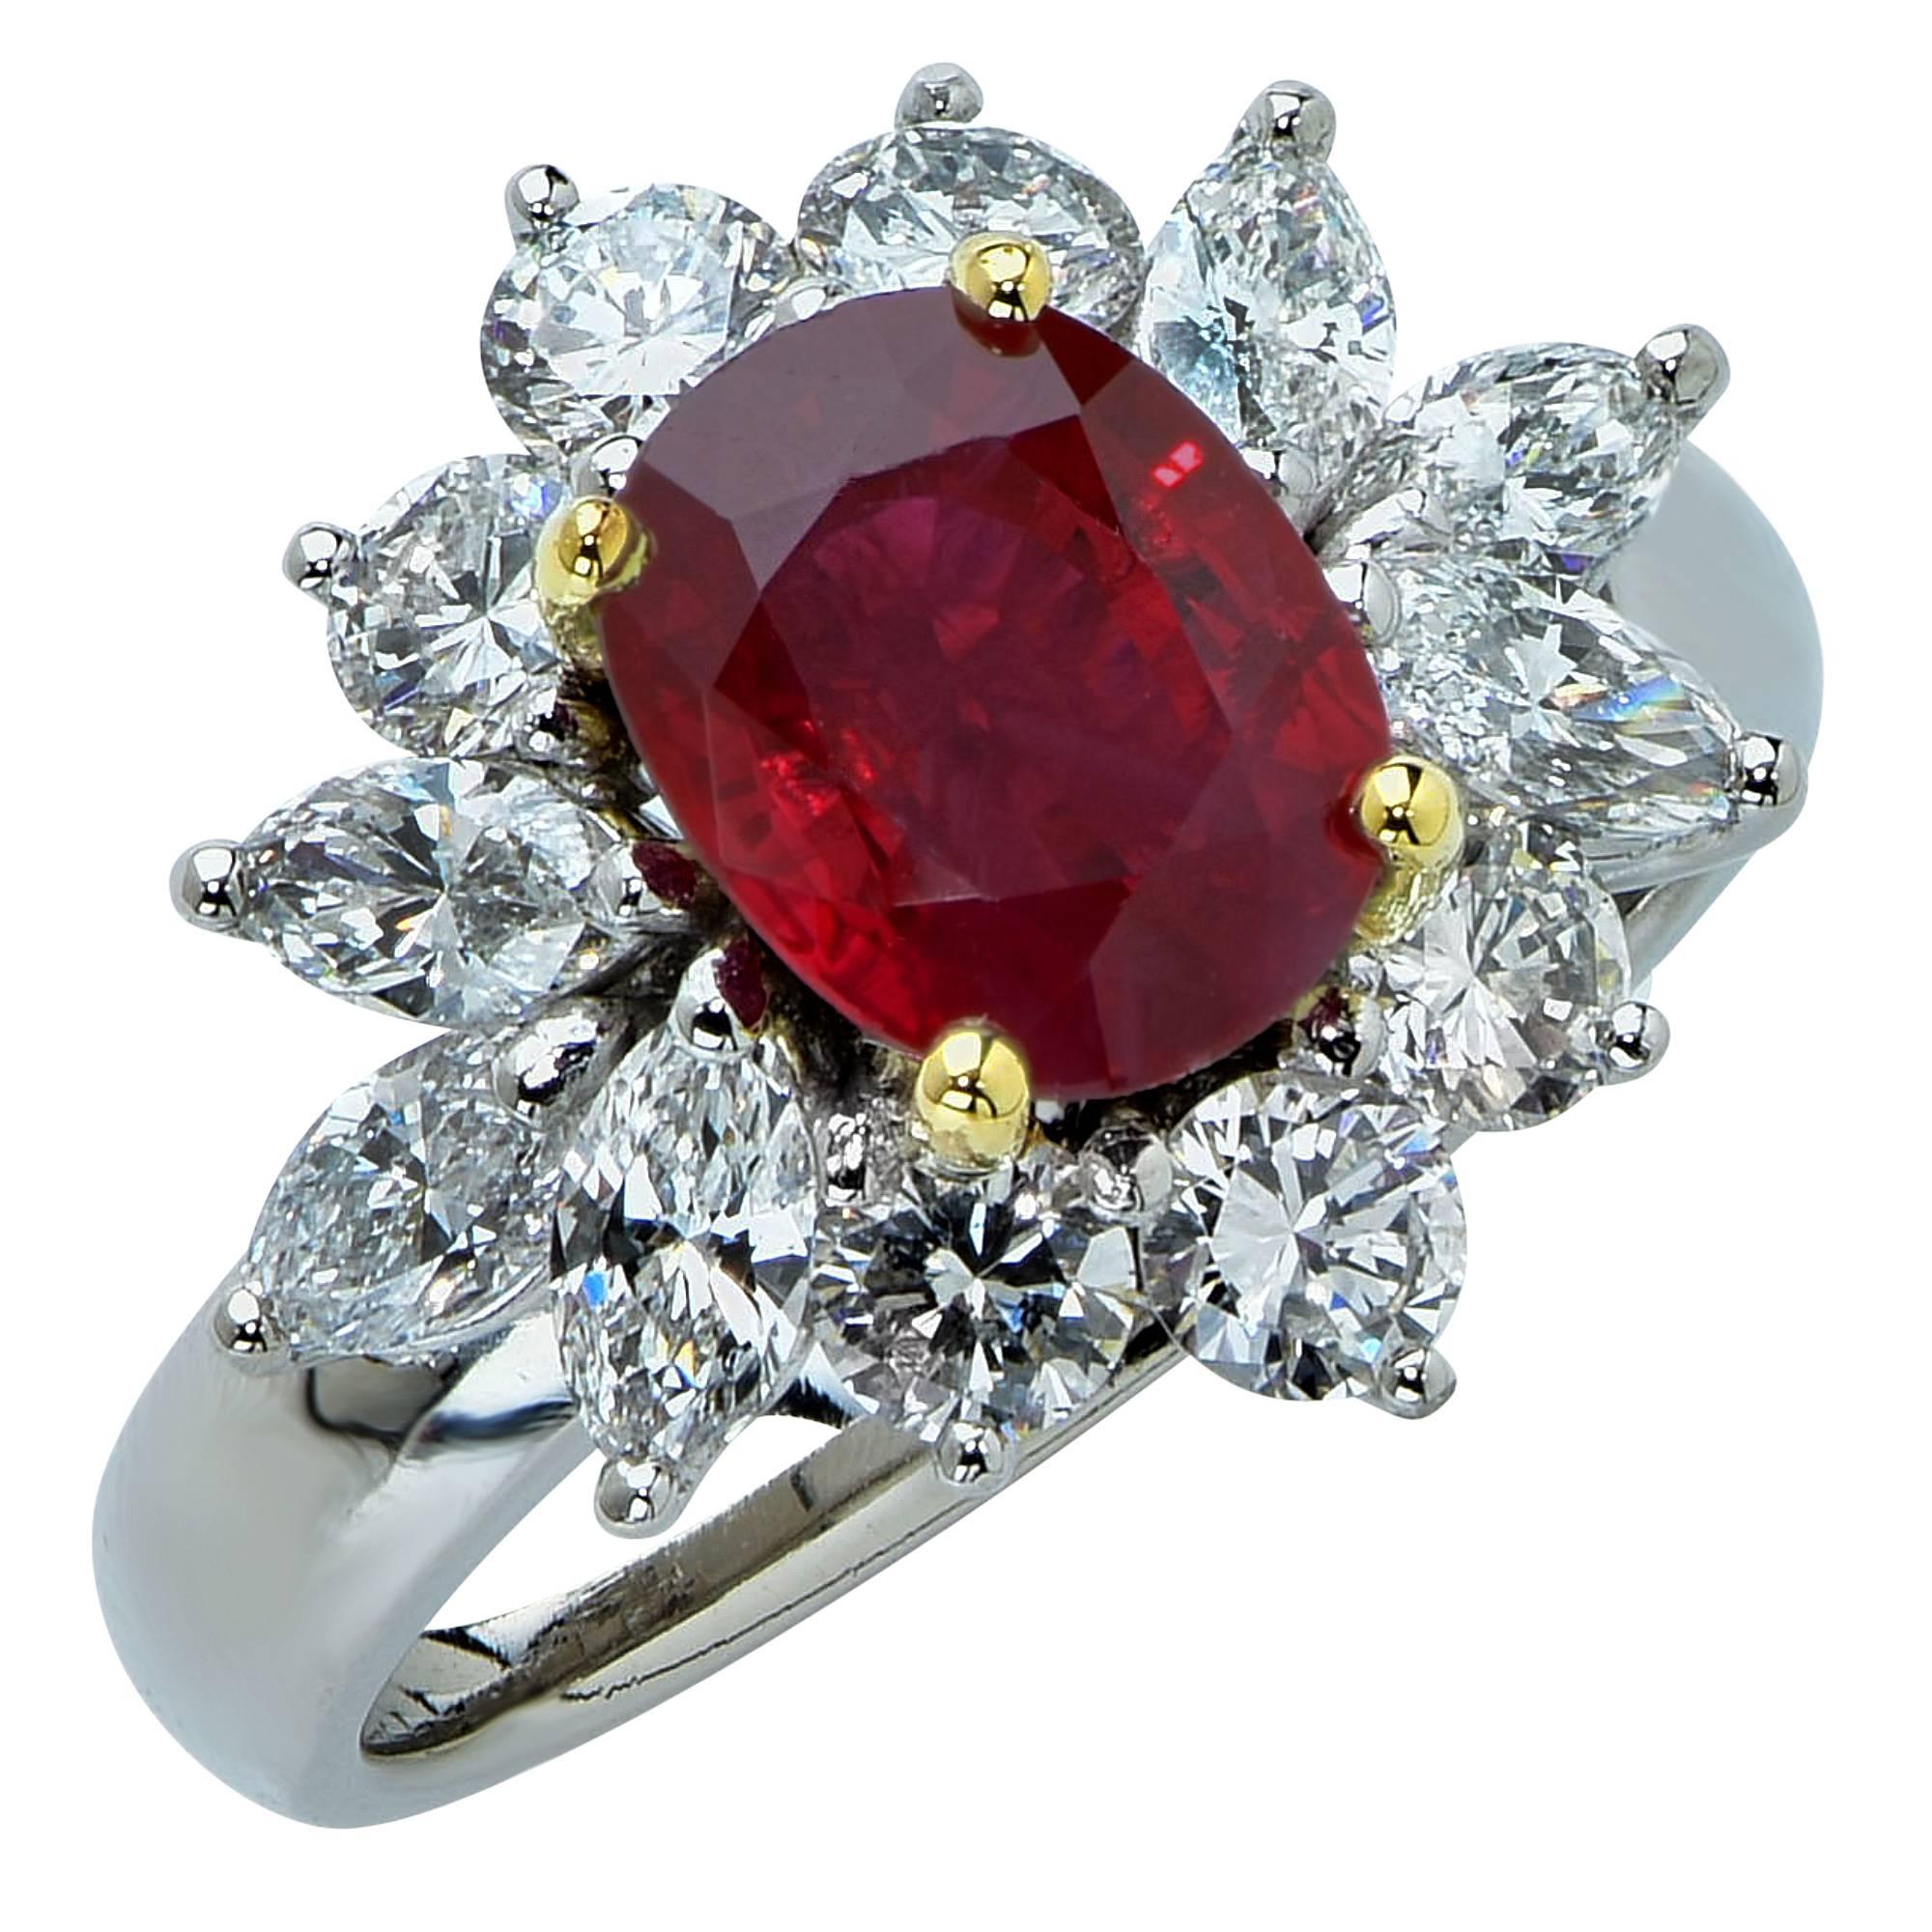 2.18 Carat Burma Ruby and Diamond Ring